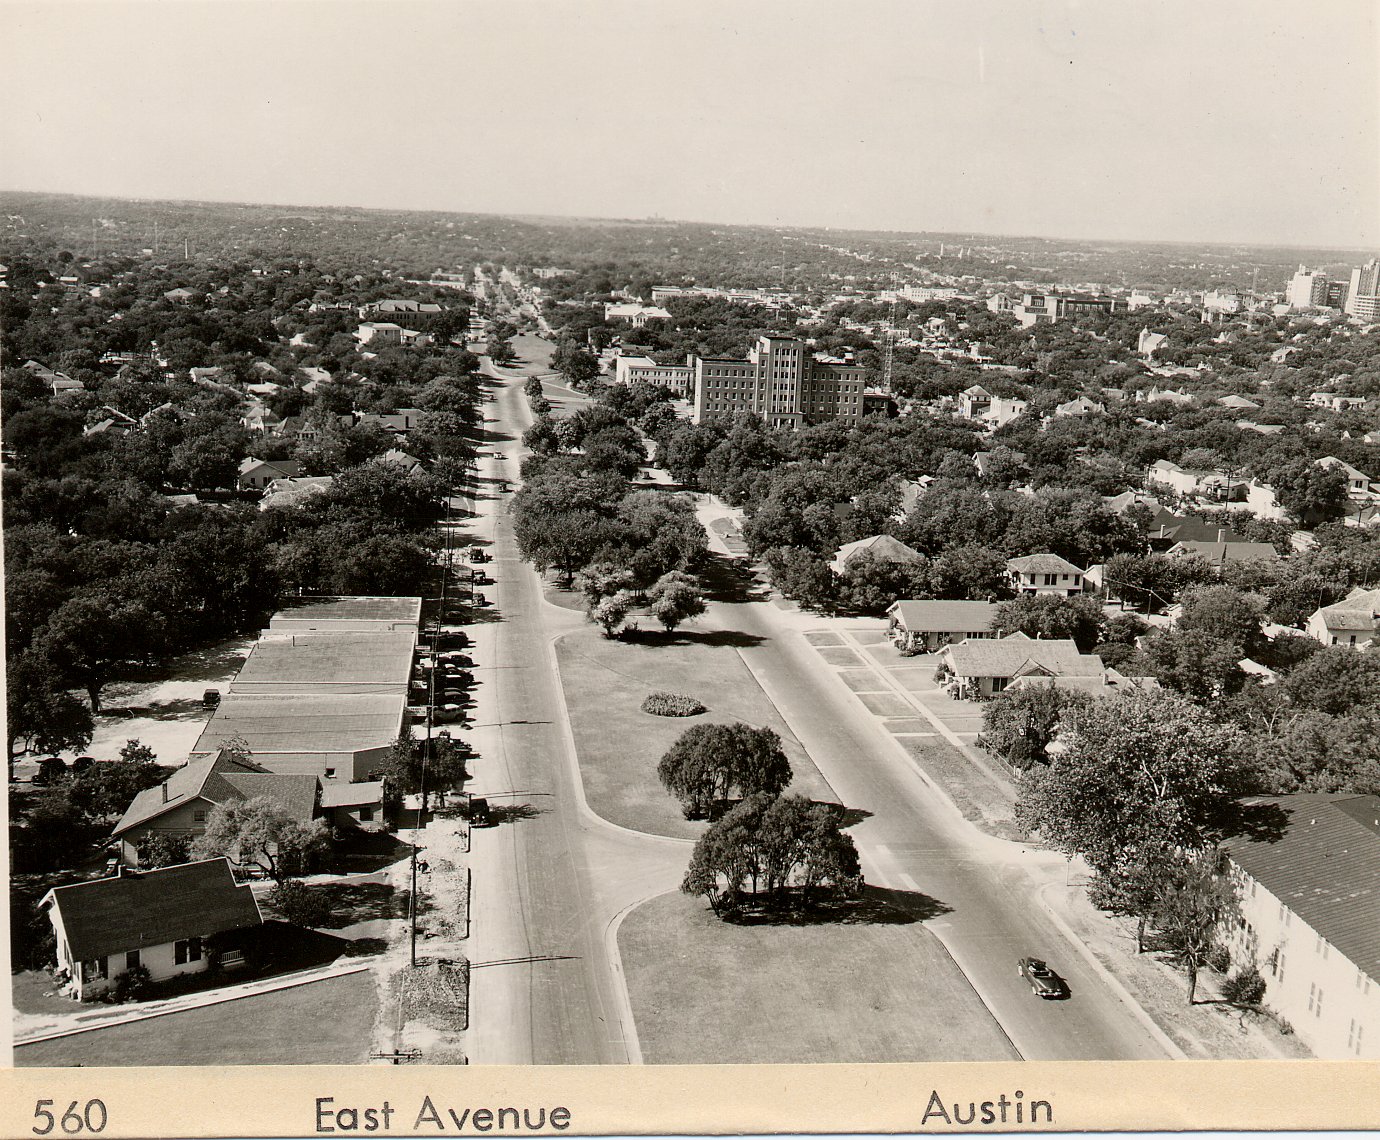 Old East Avenue, Austin, Site of Present-Day 1-35, Texas.Freeways.com